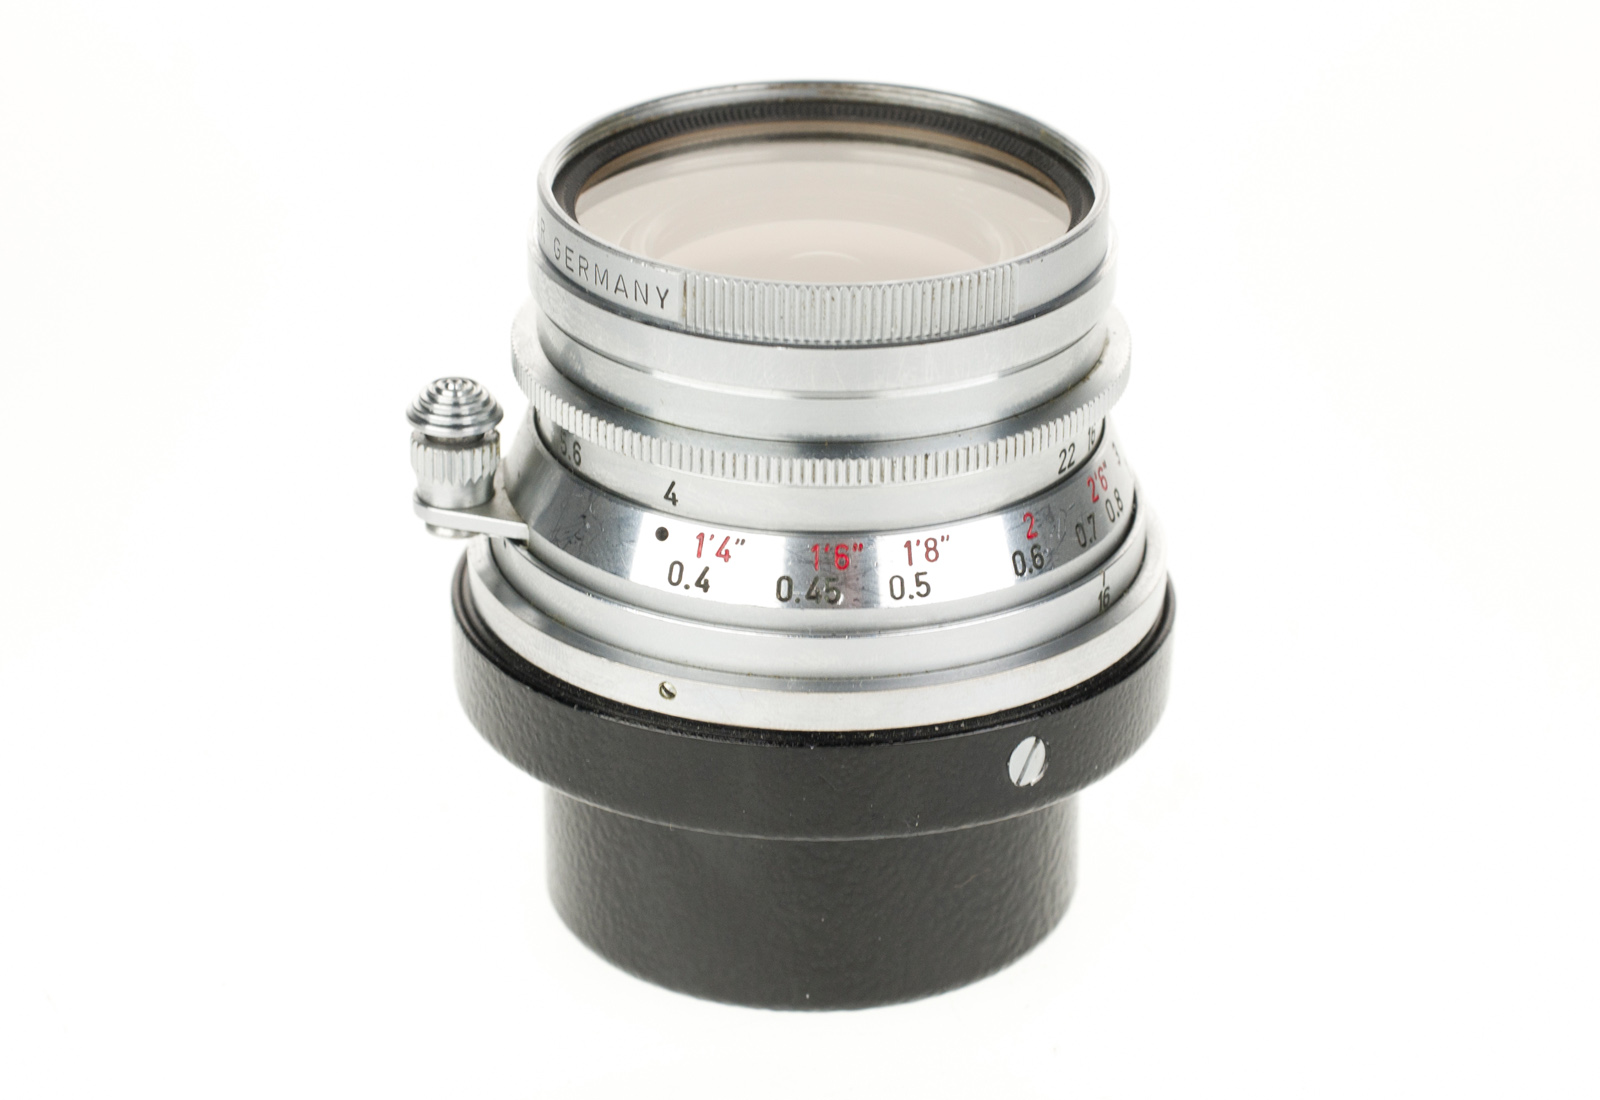 Leica Super-Angulon-M 1:4/21mm, chrome